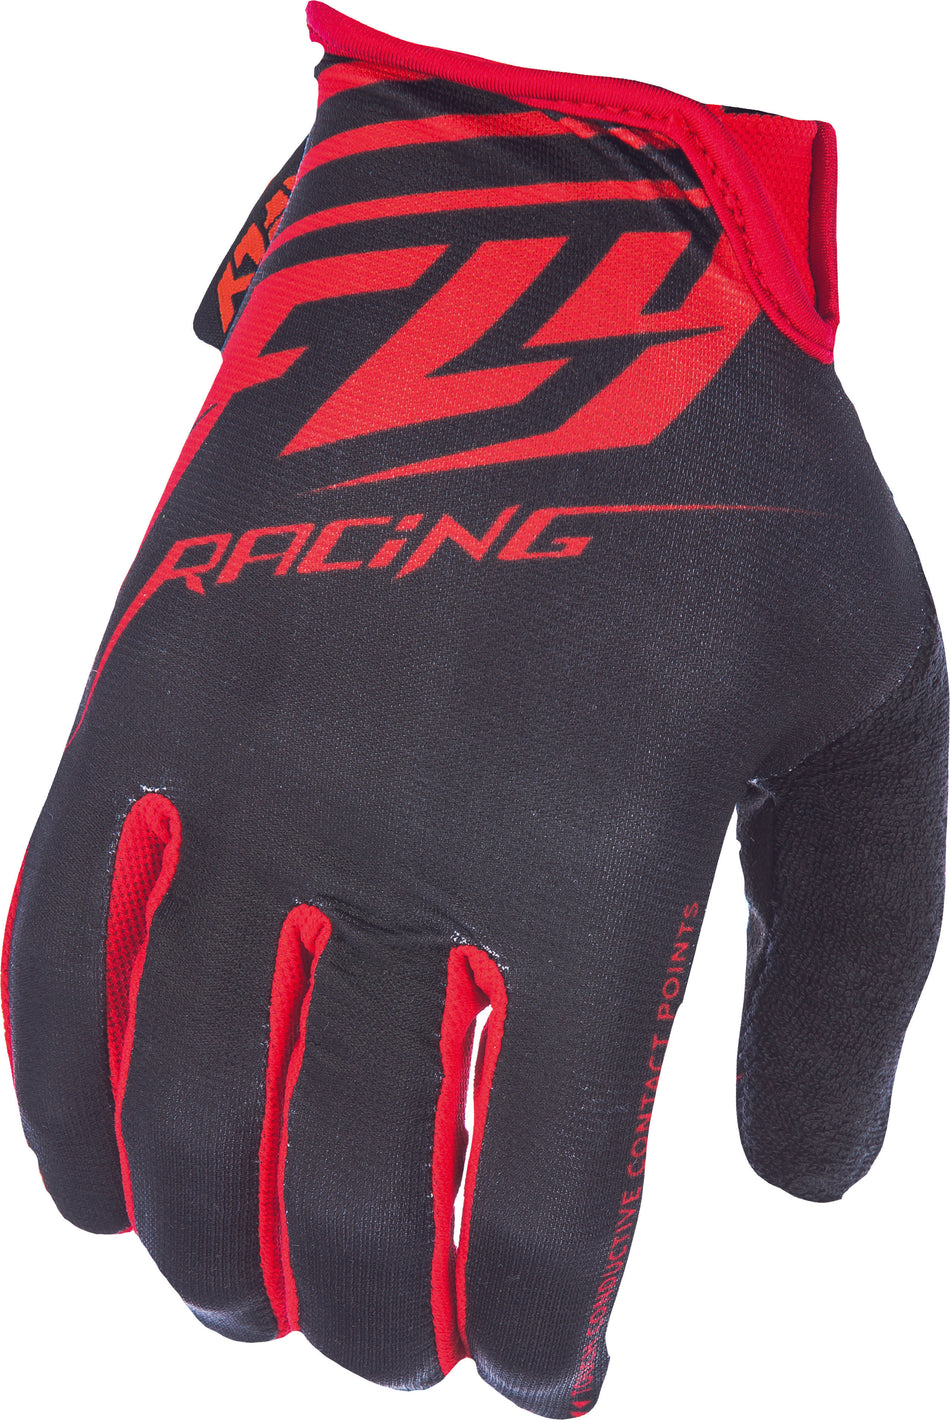 FLY RACING Media Gloves Black/Red Sz 11 350-07211